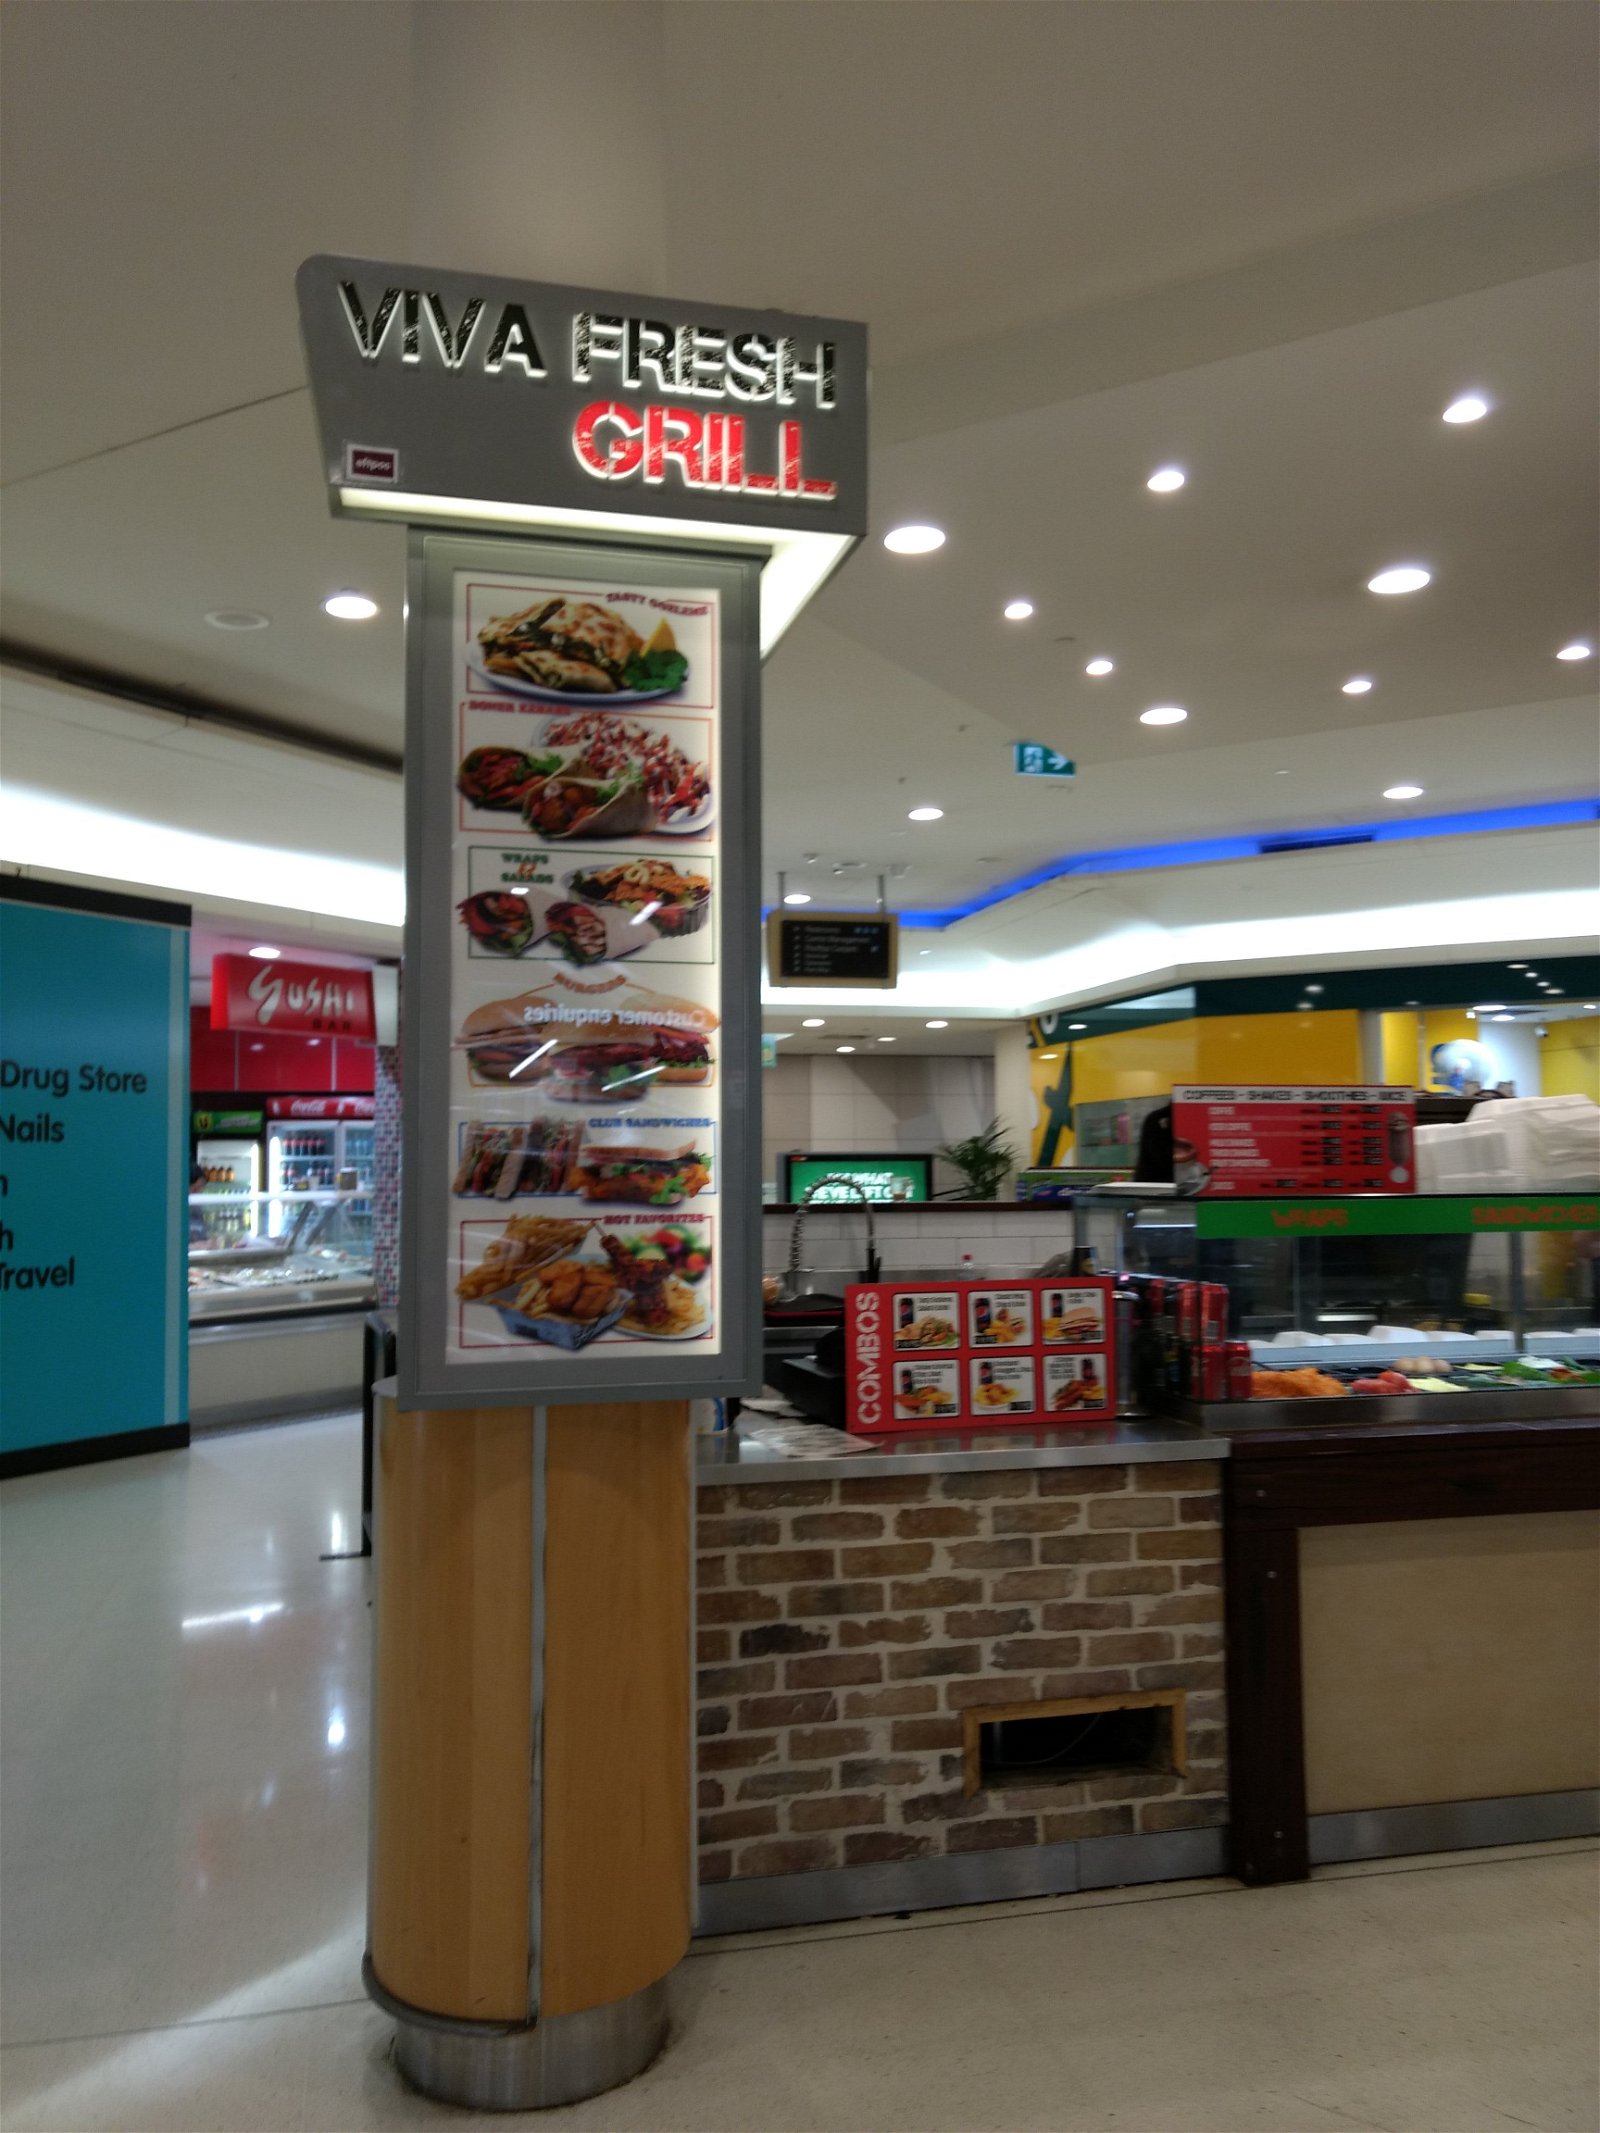 Viva Fresh Grill - Australia Accommodation